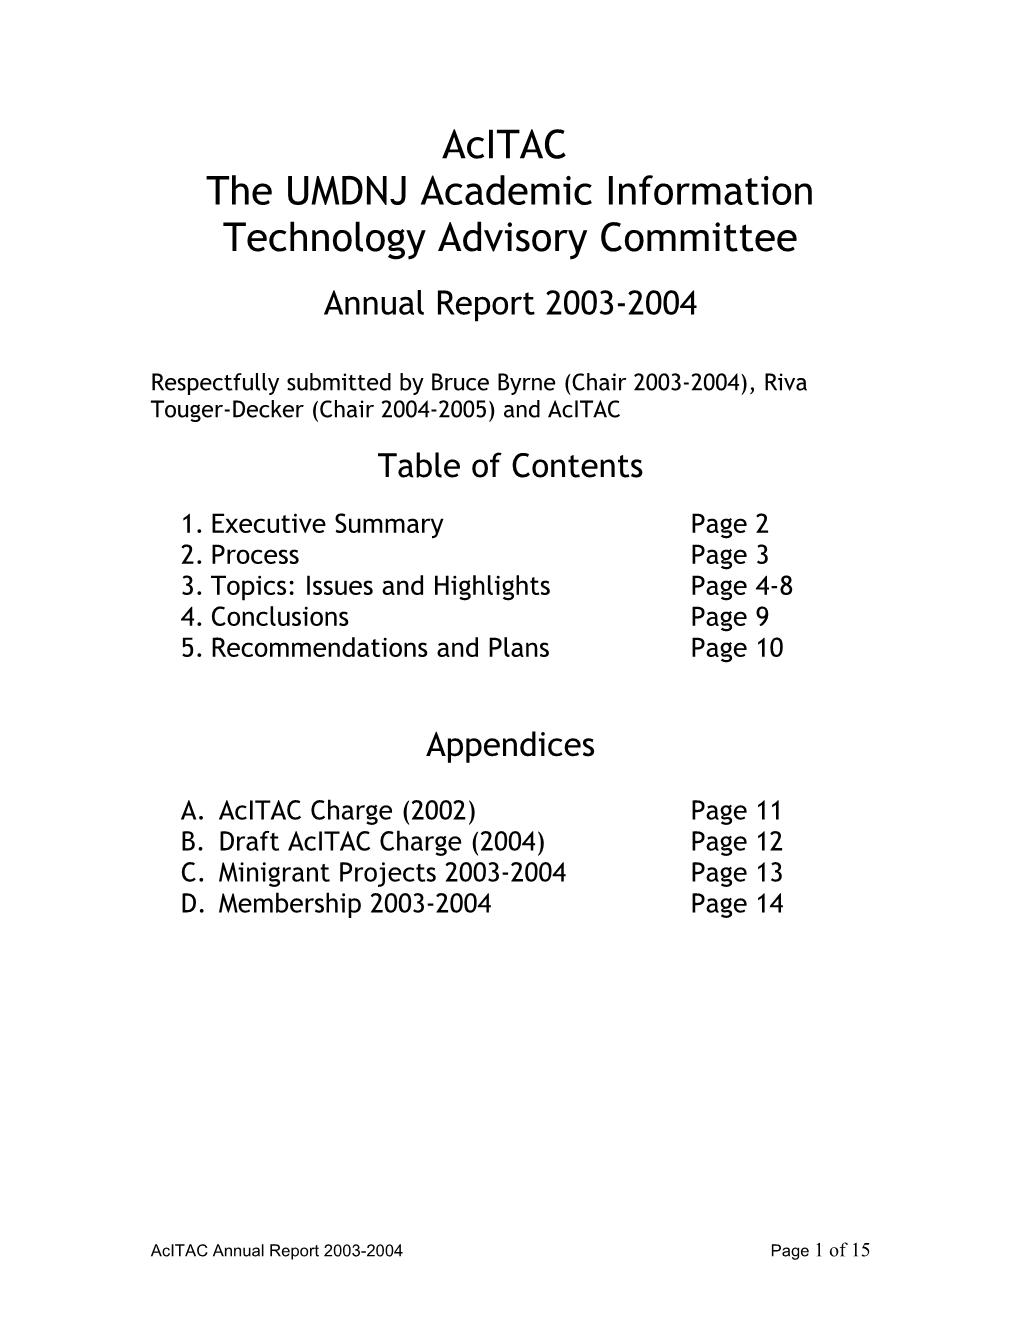 The UMDNJ Academic Information Technology Advisory Committee